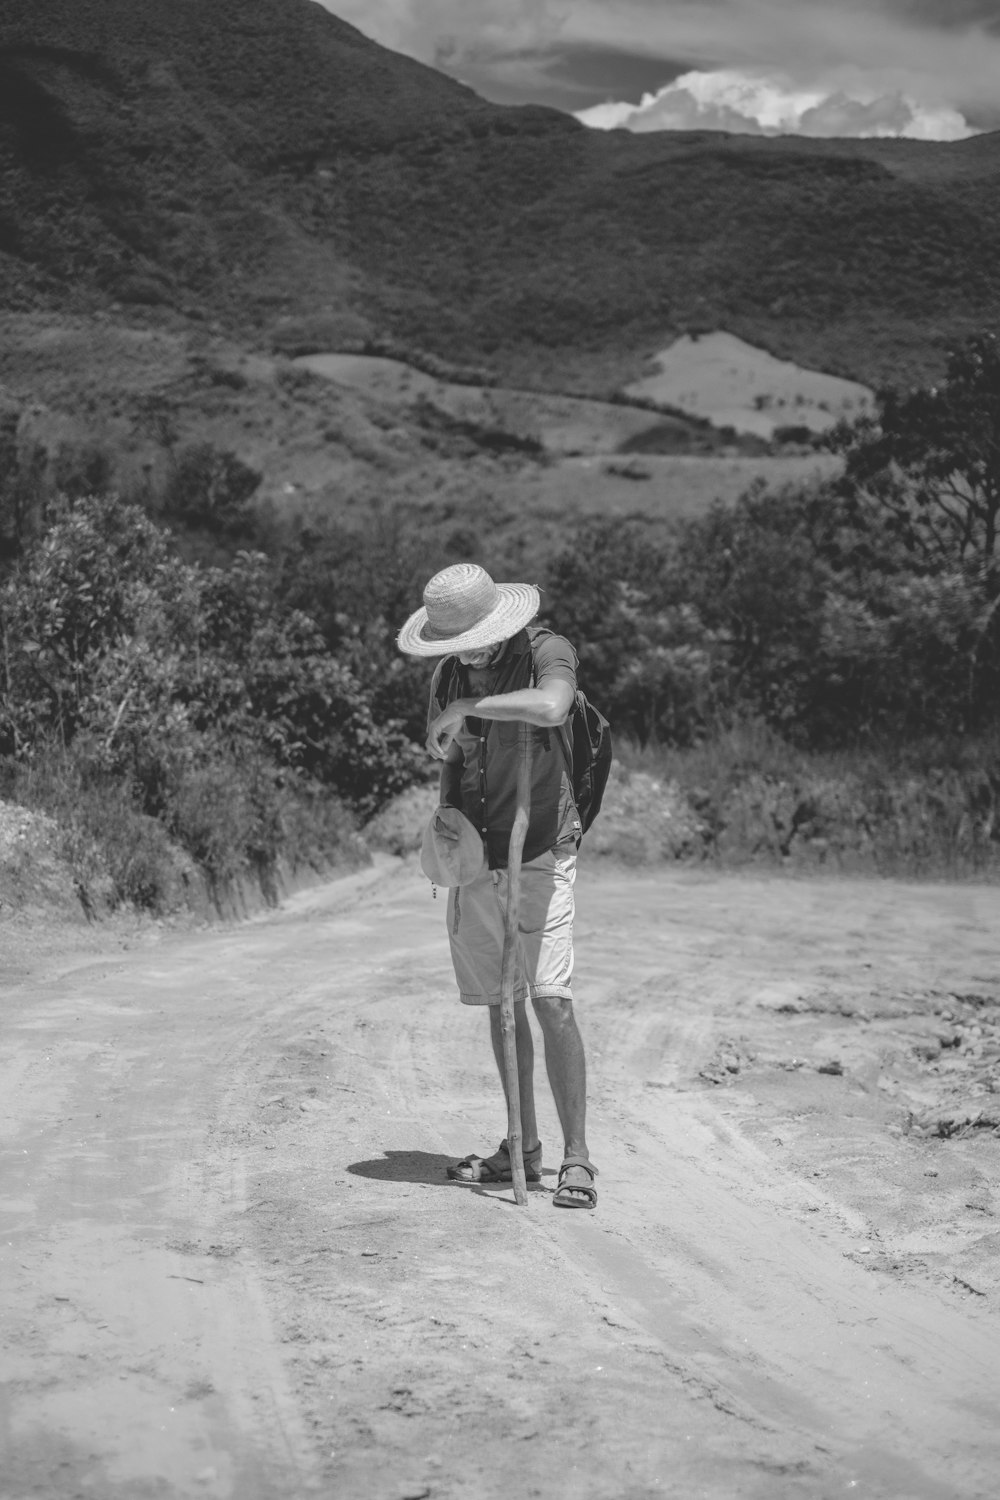 man in black shirt and brown pants wearing white hat walking on dirt road during daytime